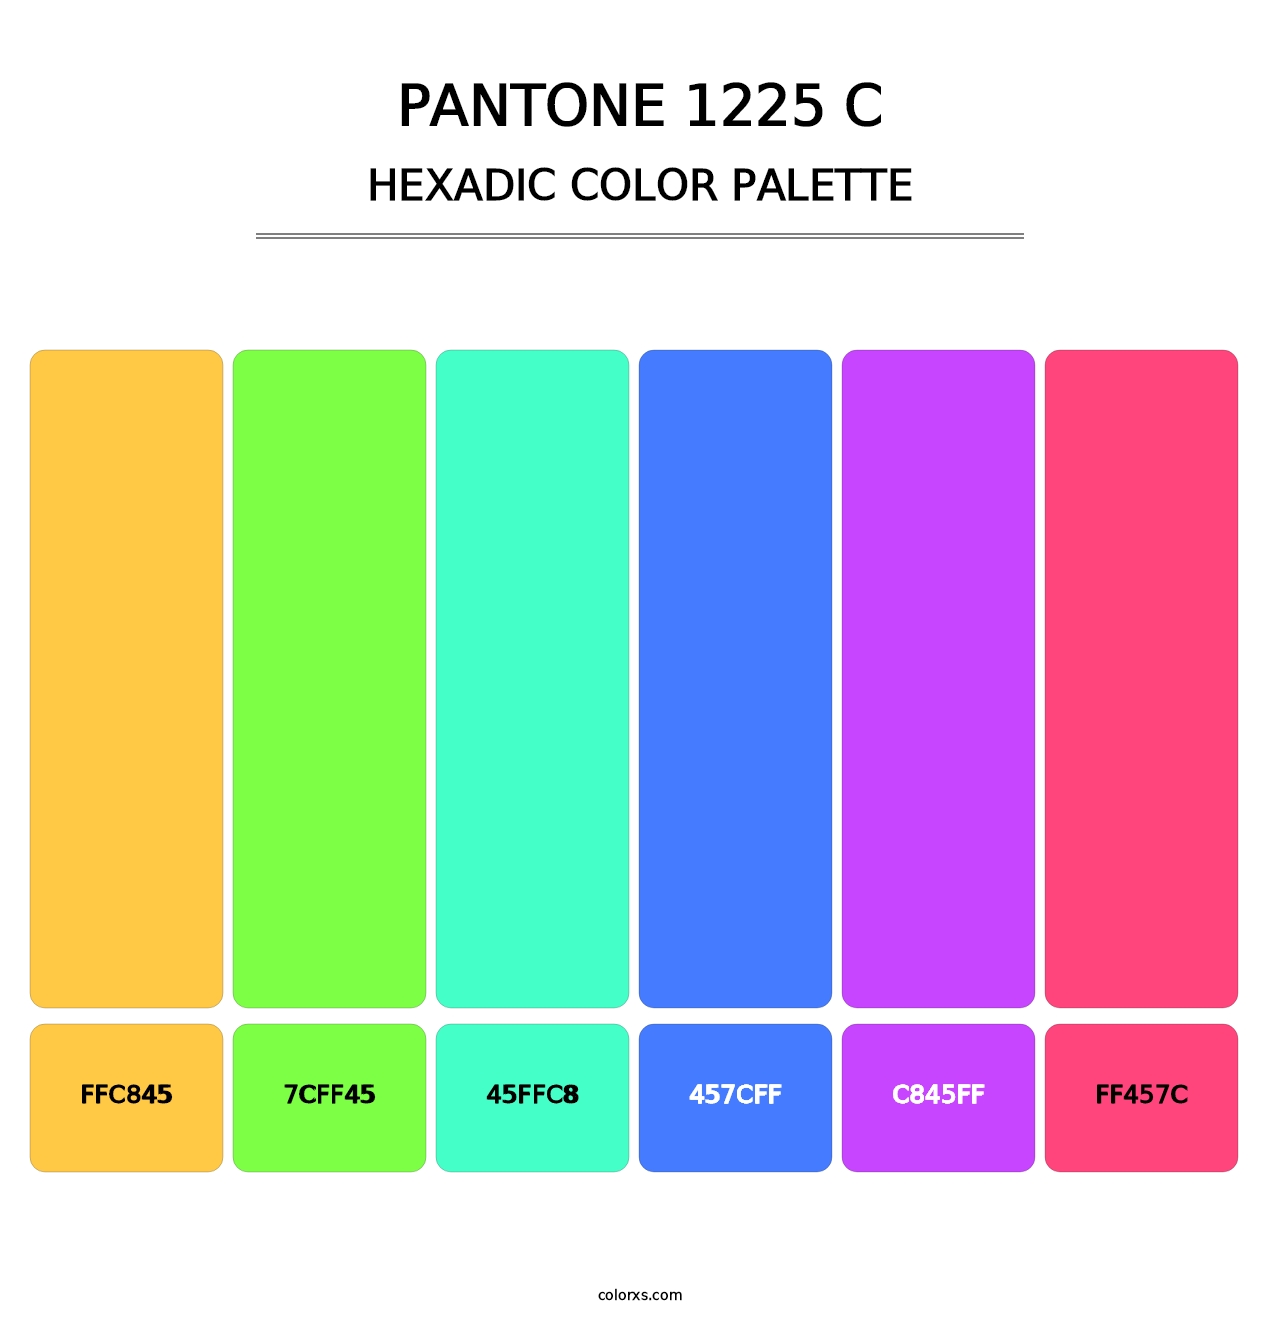 PANTONE 1225 C - Hexadic Color Palette